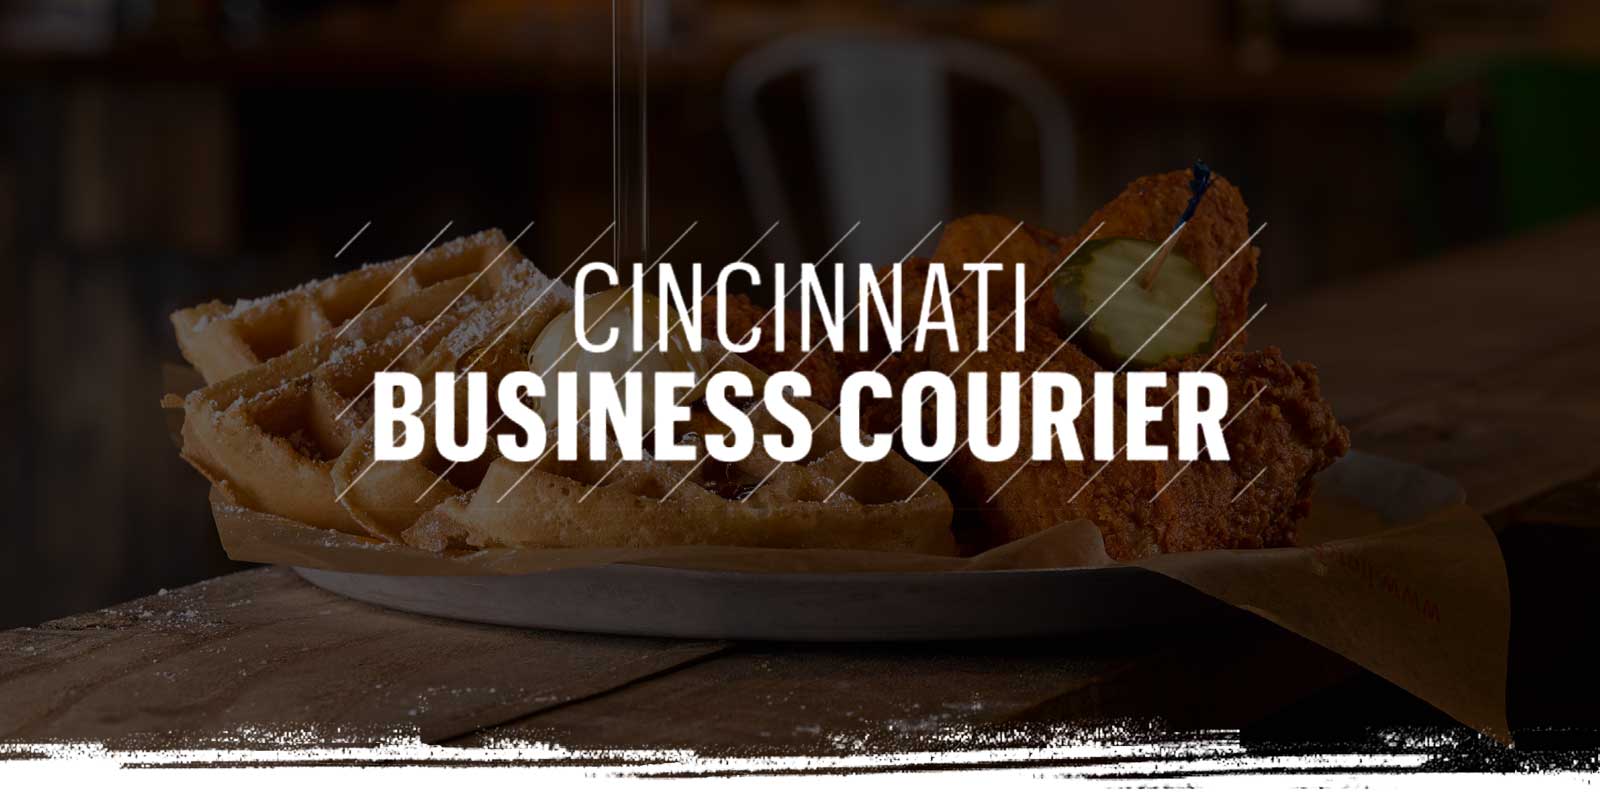 Cincinnati Business Courier logo on Chicken & Waffles background